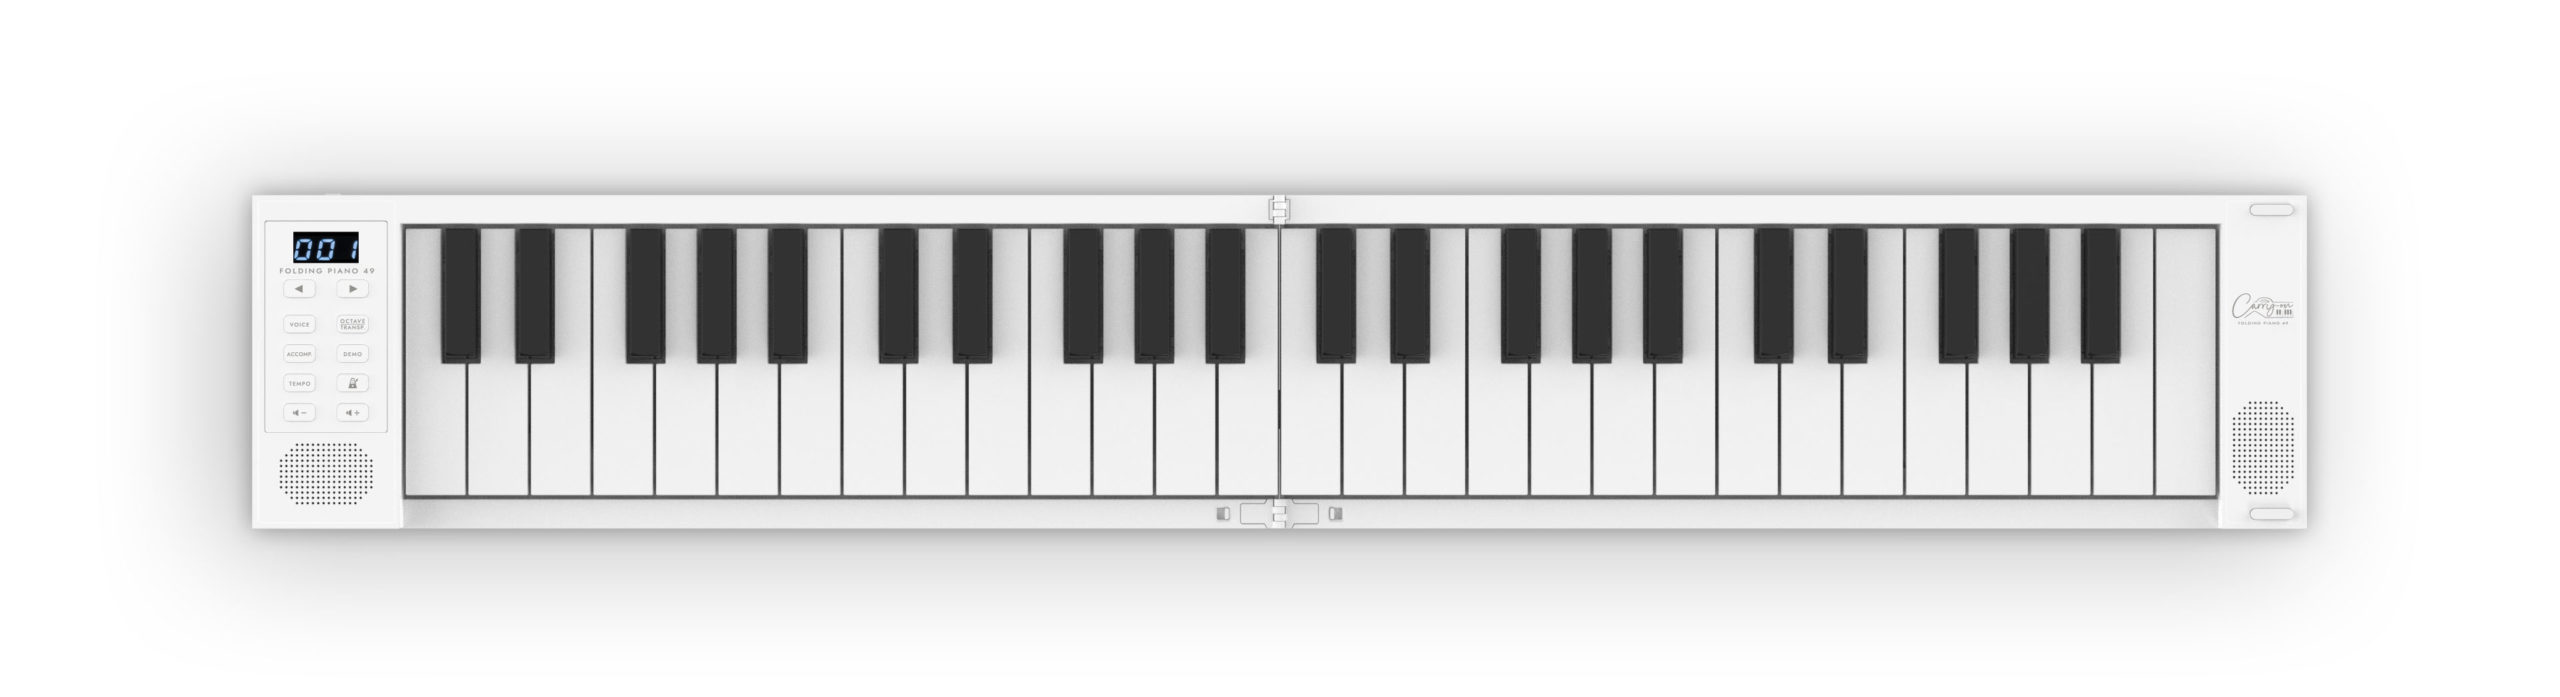 Carry-On 88-Key Folding Piano - Review & Demo - A Foldable MIDI